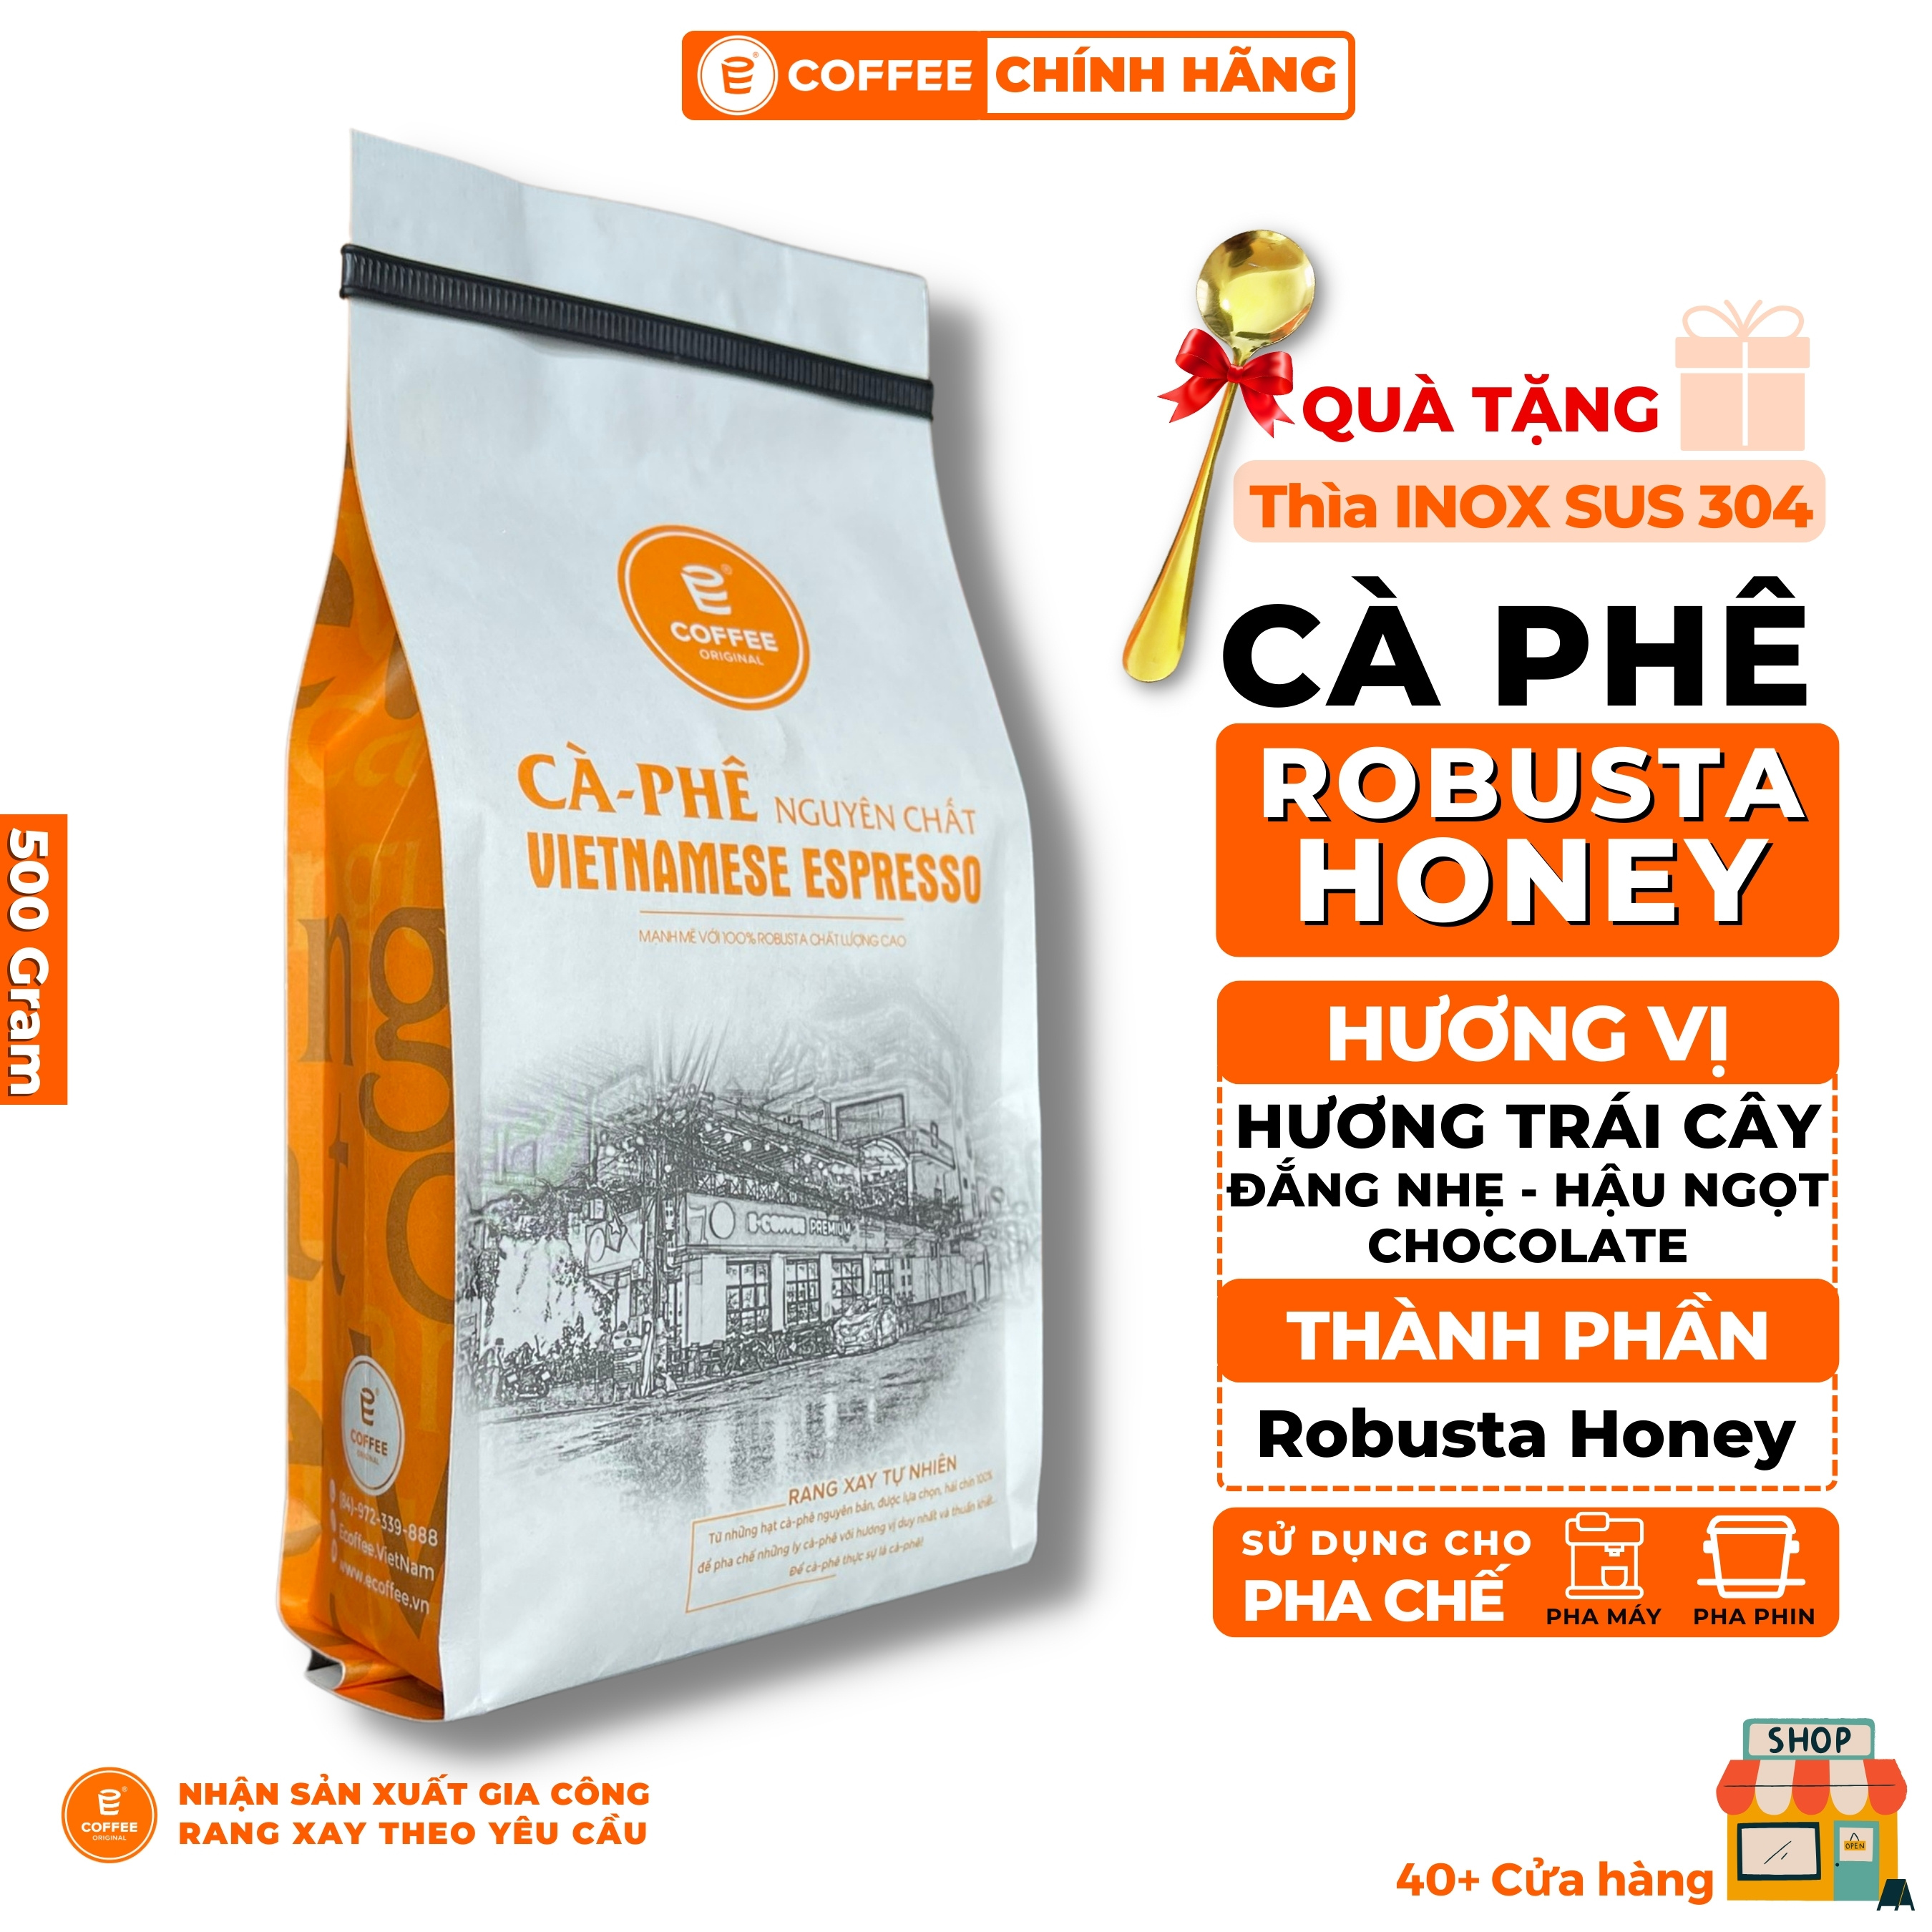 Coffee Robusta honey series Vietnamese espresso use fine robusta flavored